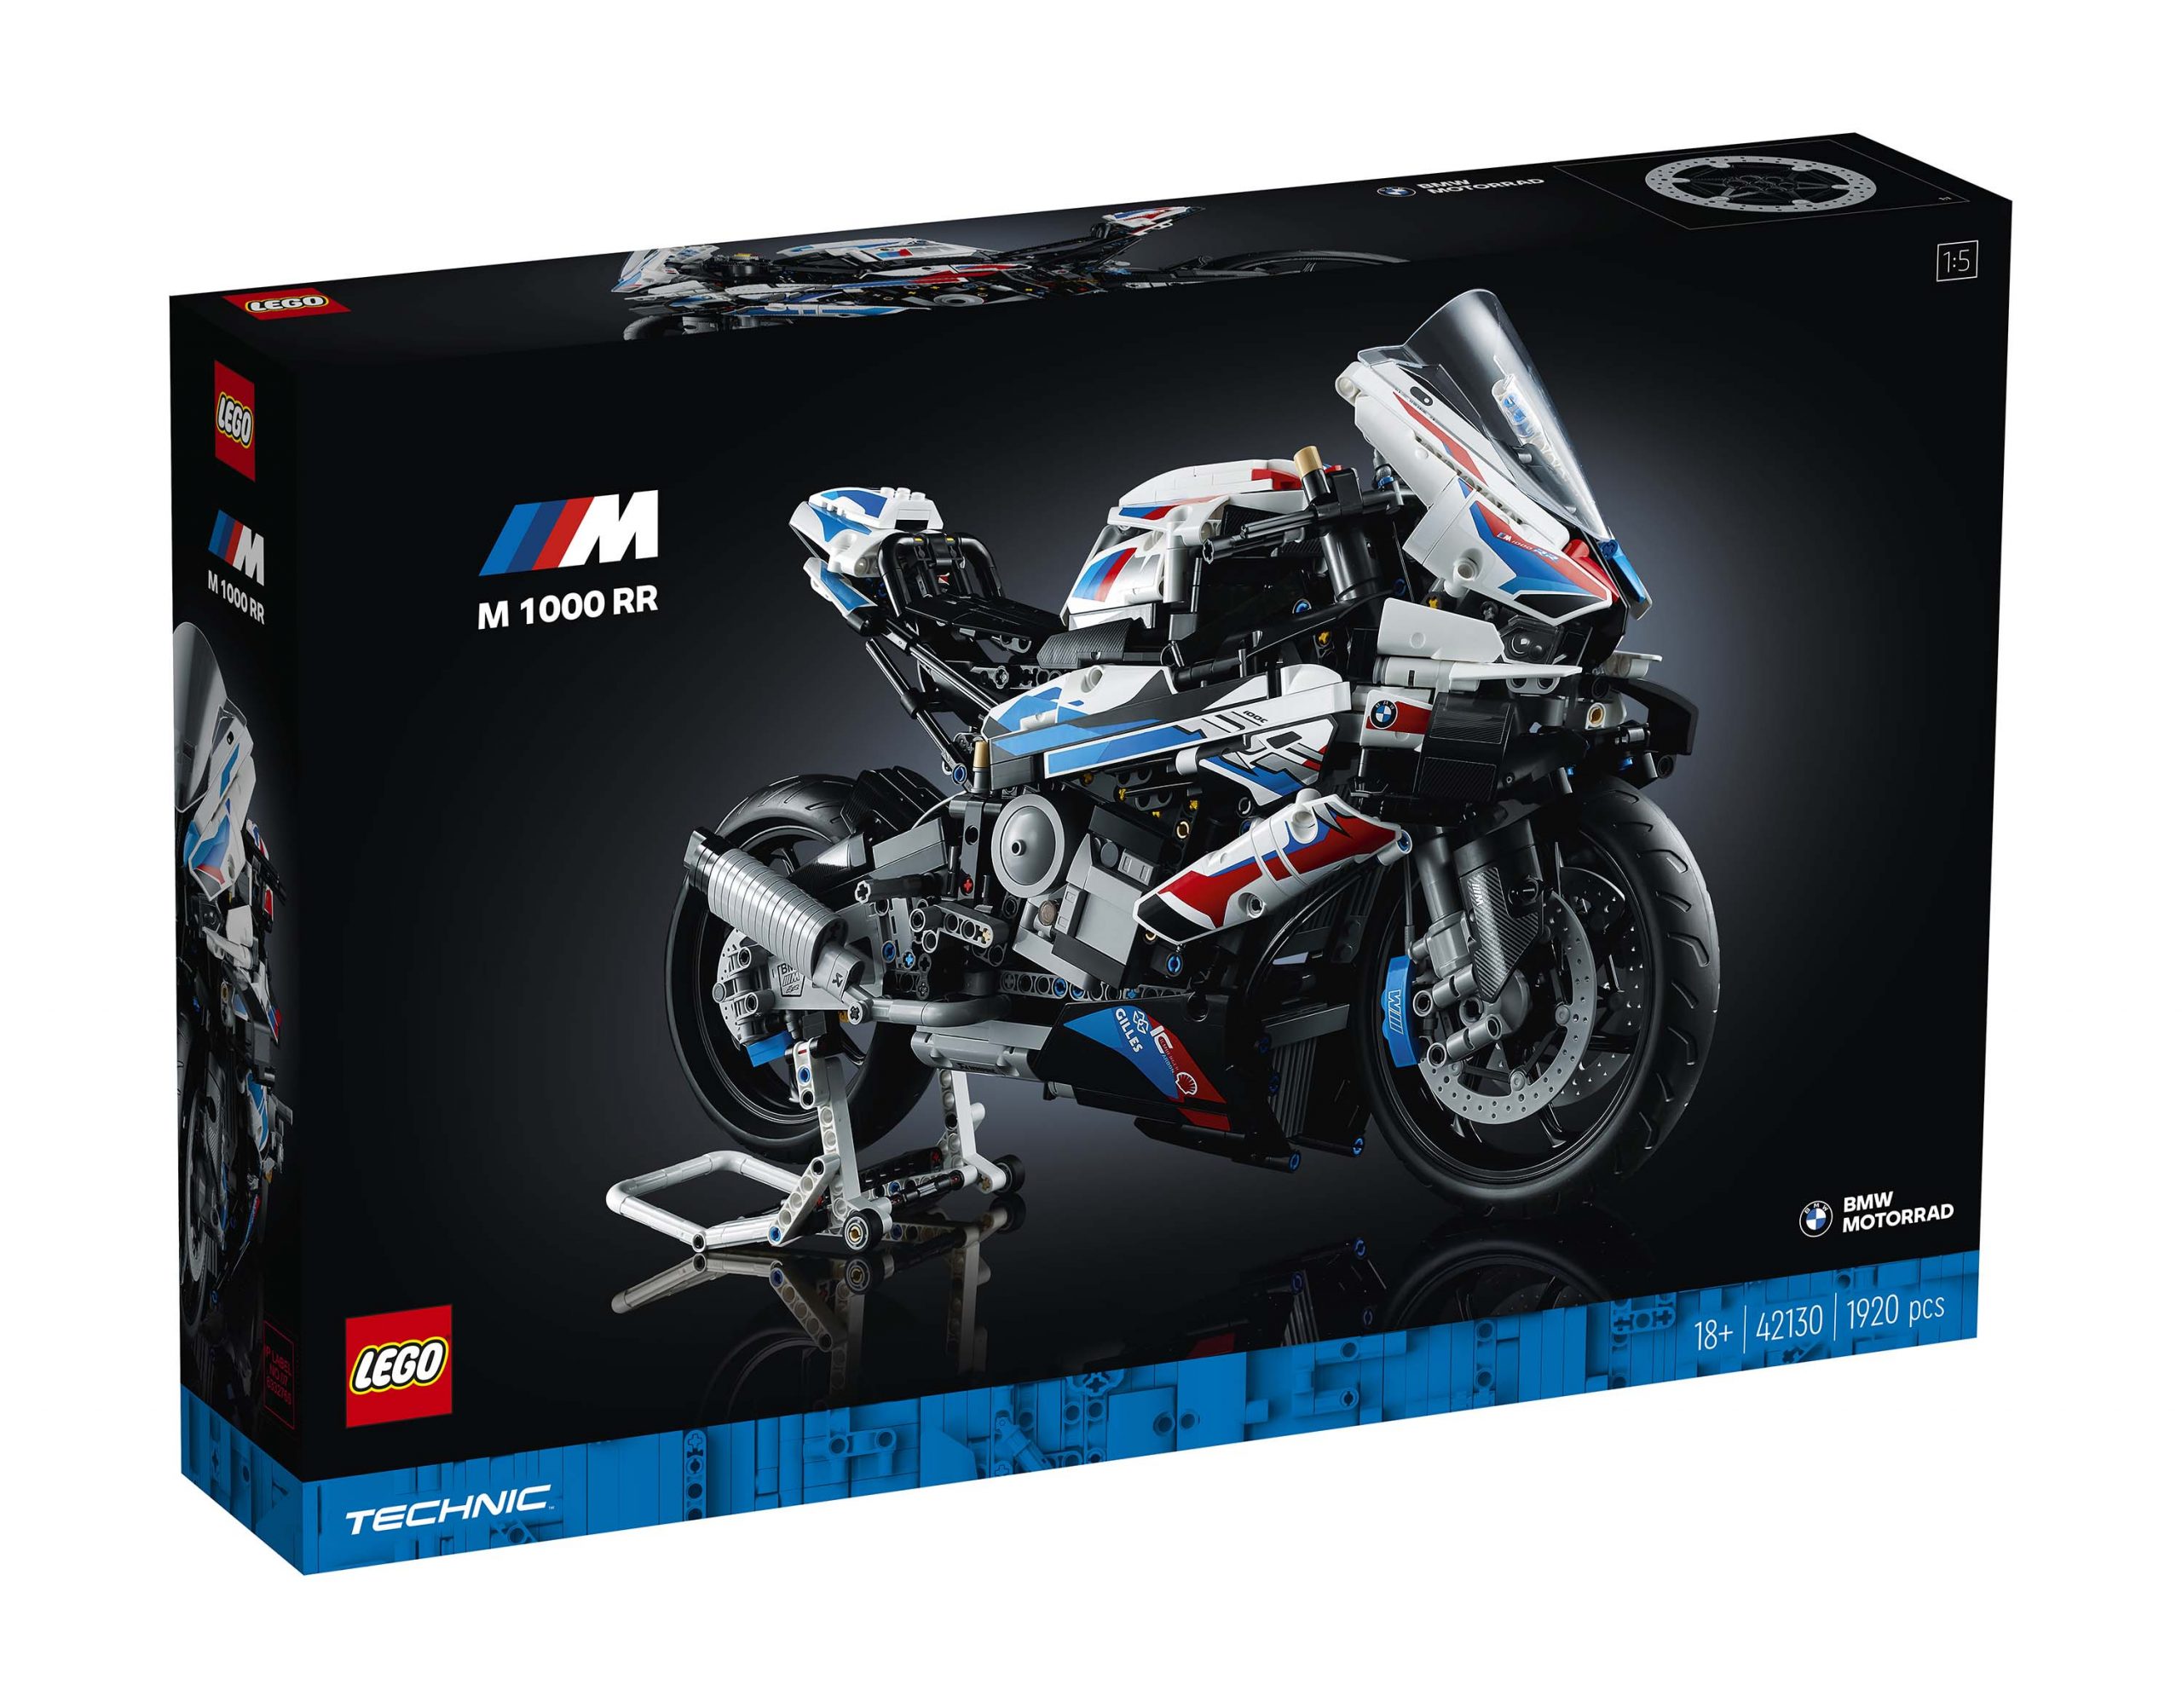 BMW-M1000RR-superbike-LEGO-Technic-set-01